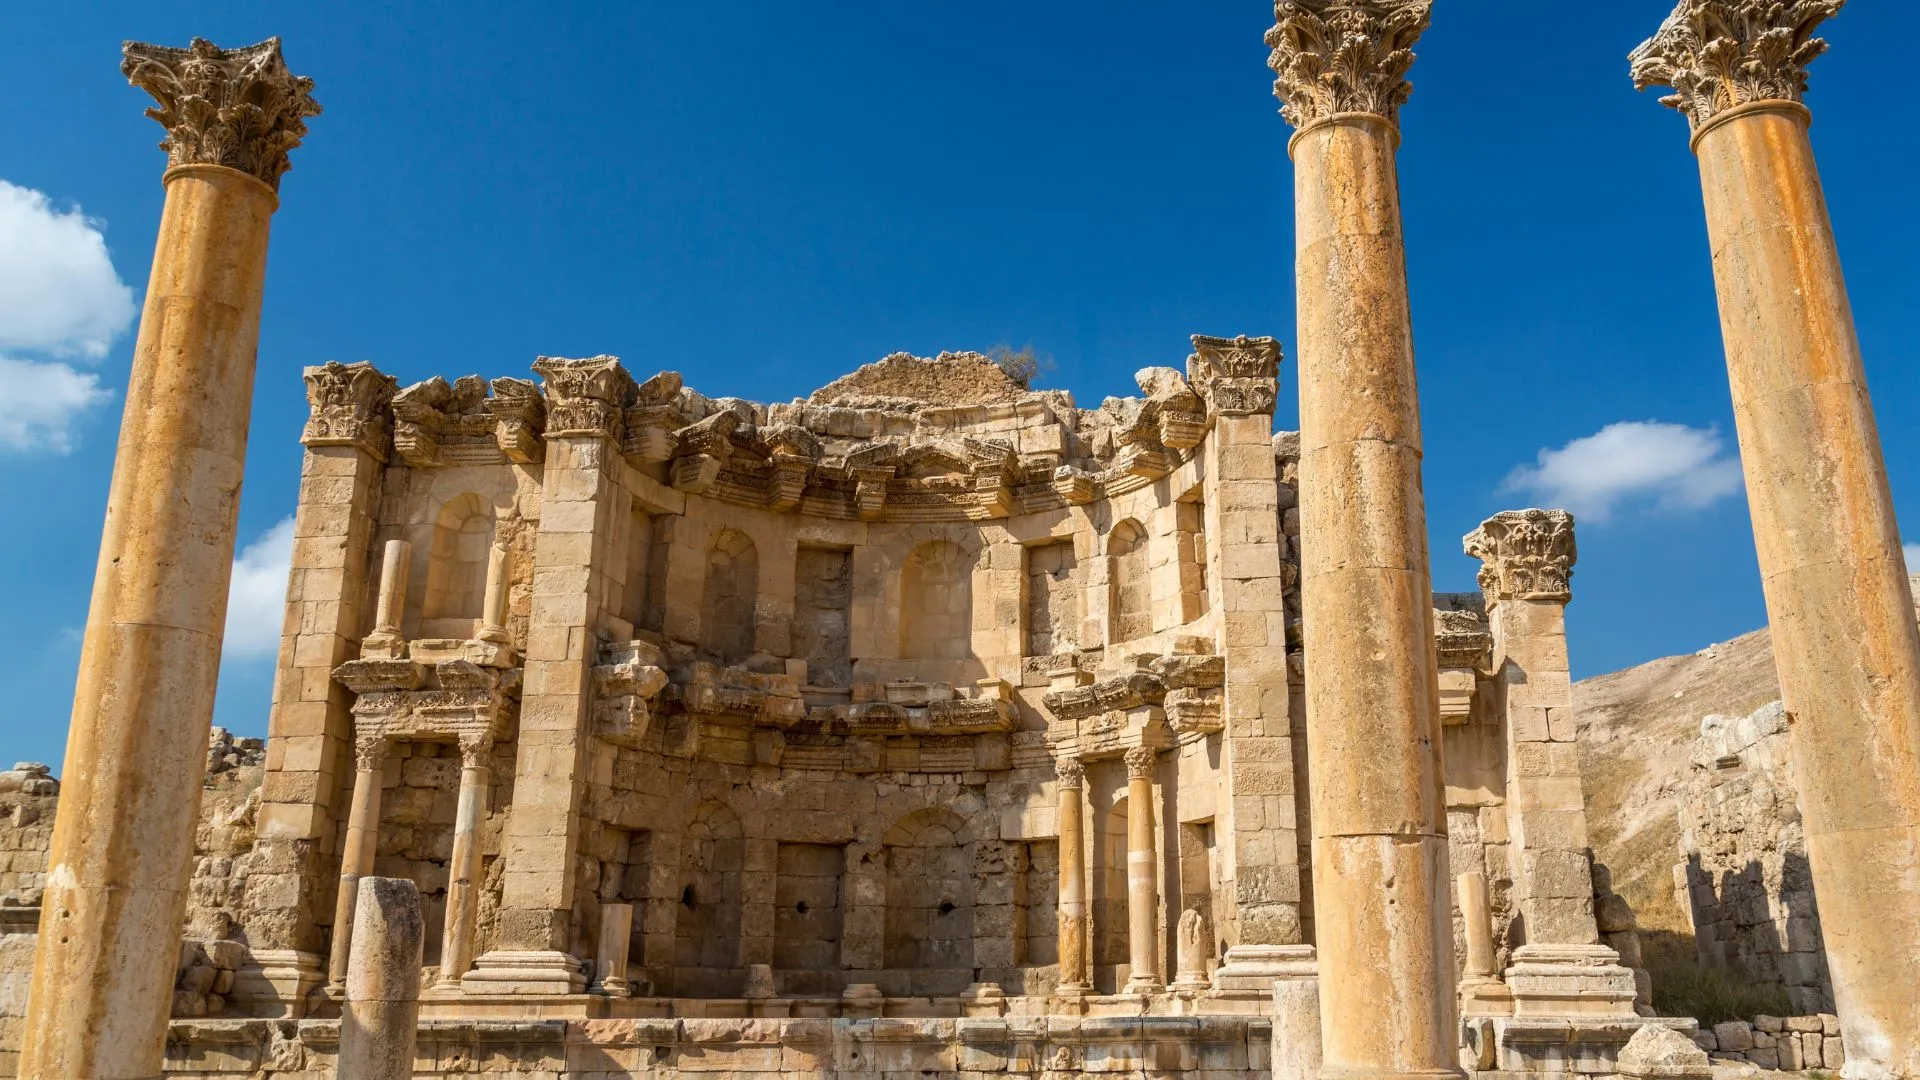 Jordan Historical Sites - Jerash